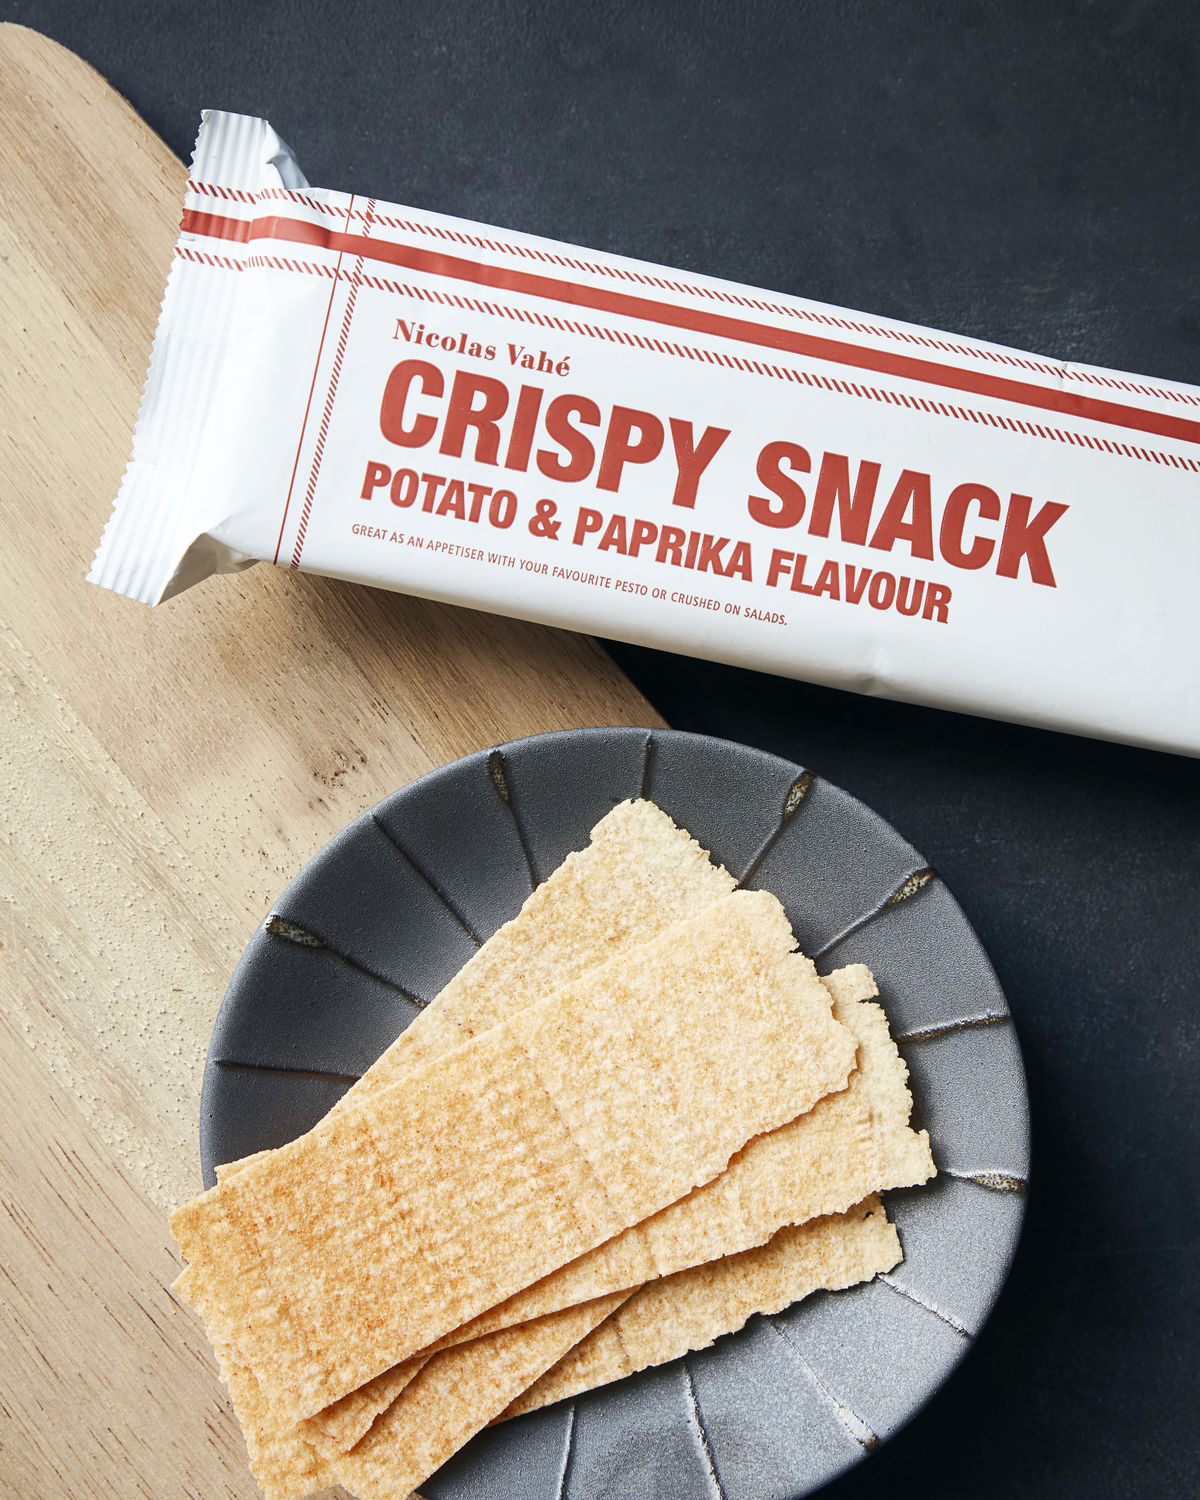 Crispy Snack - Potato & Paprika